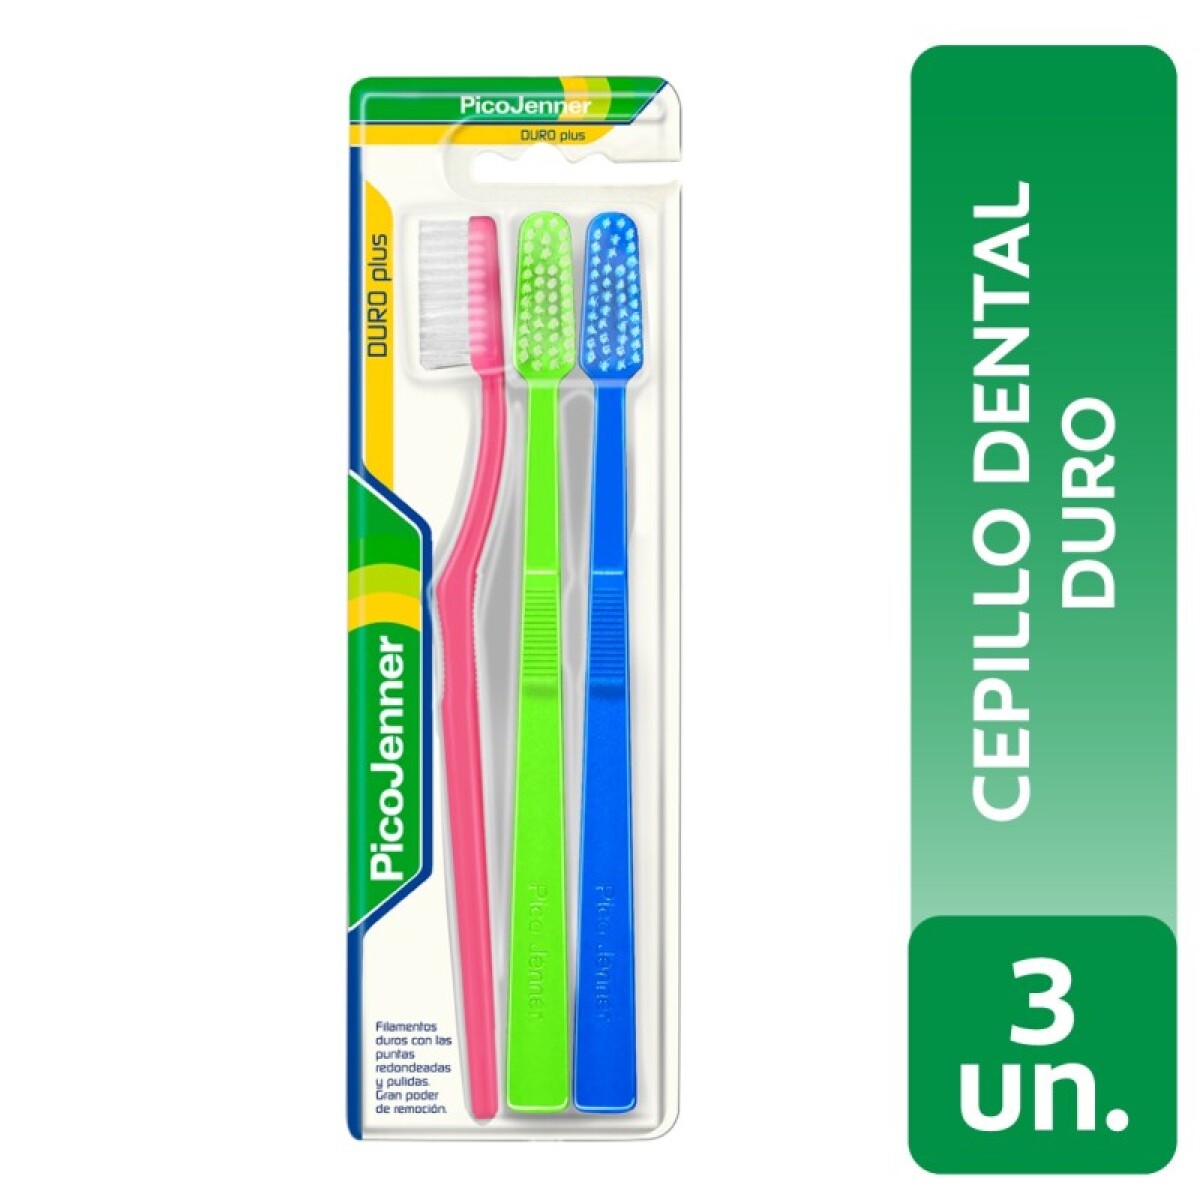 Packx3 cepillo dental Pico Jenner - Duro plus 